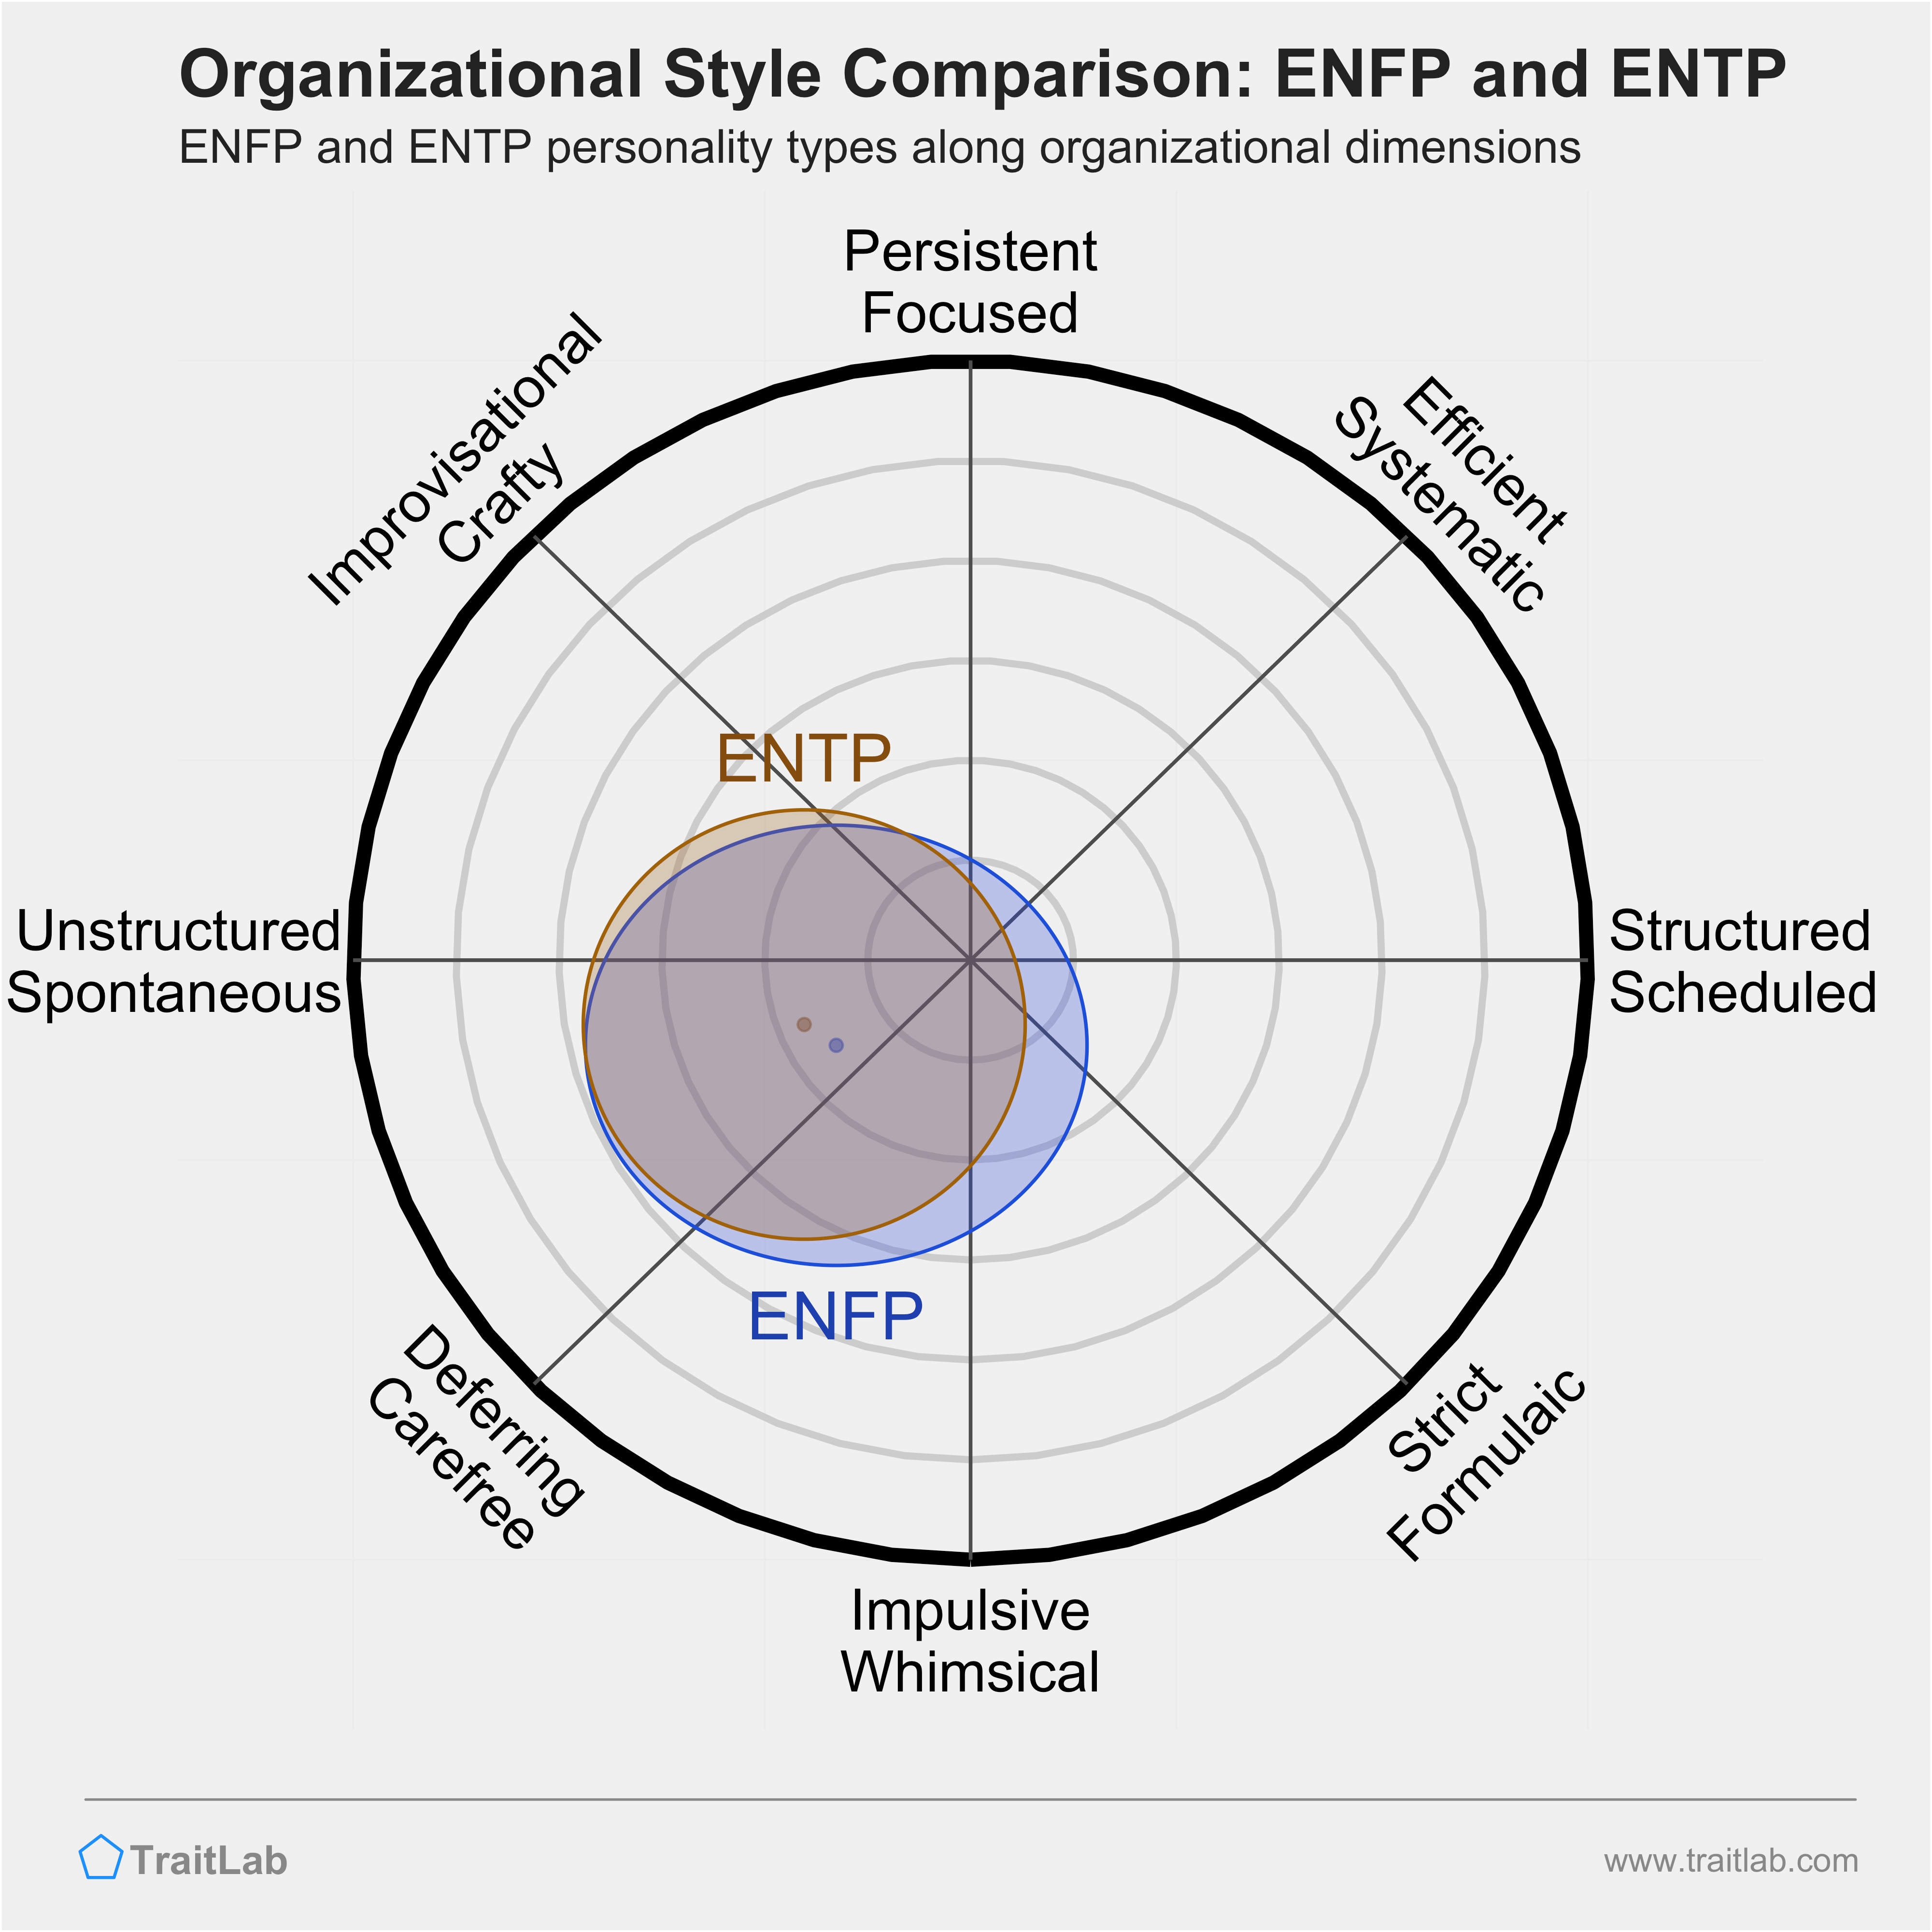 ENFP and ENTP comparison across organizational dimensions